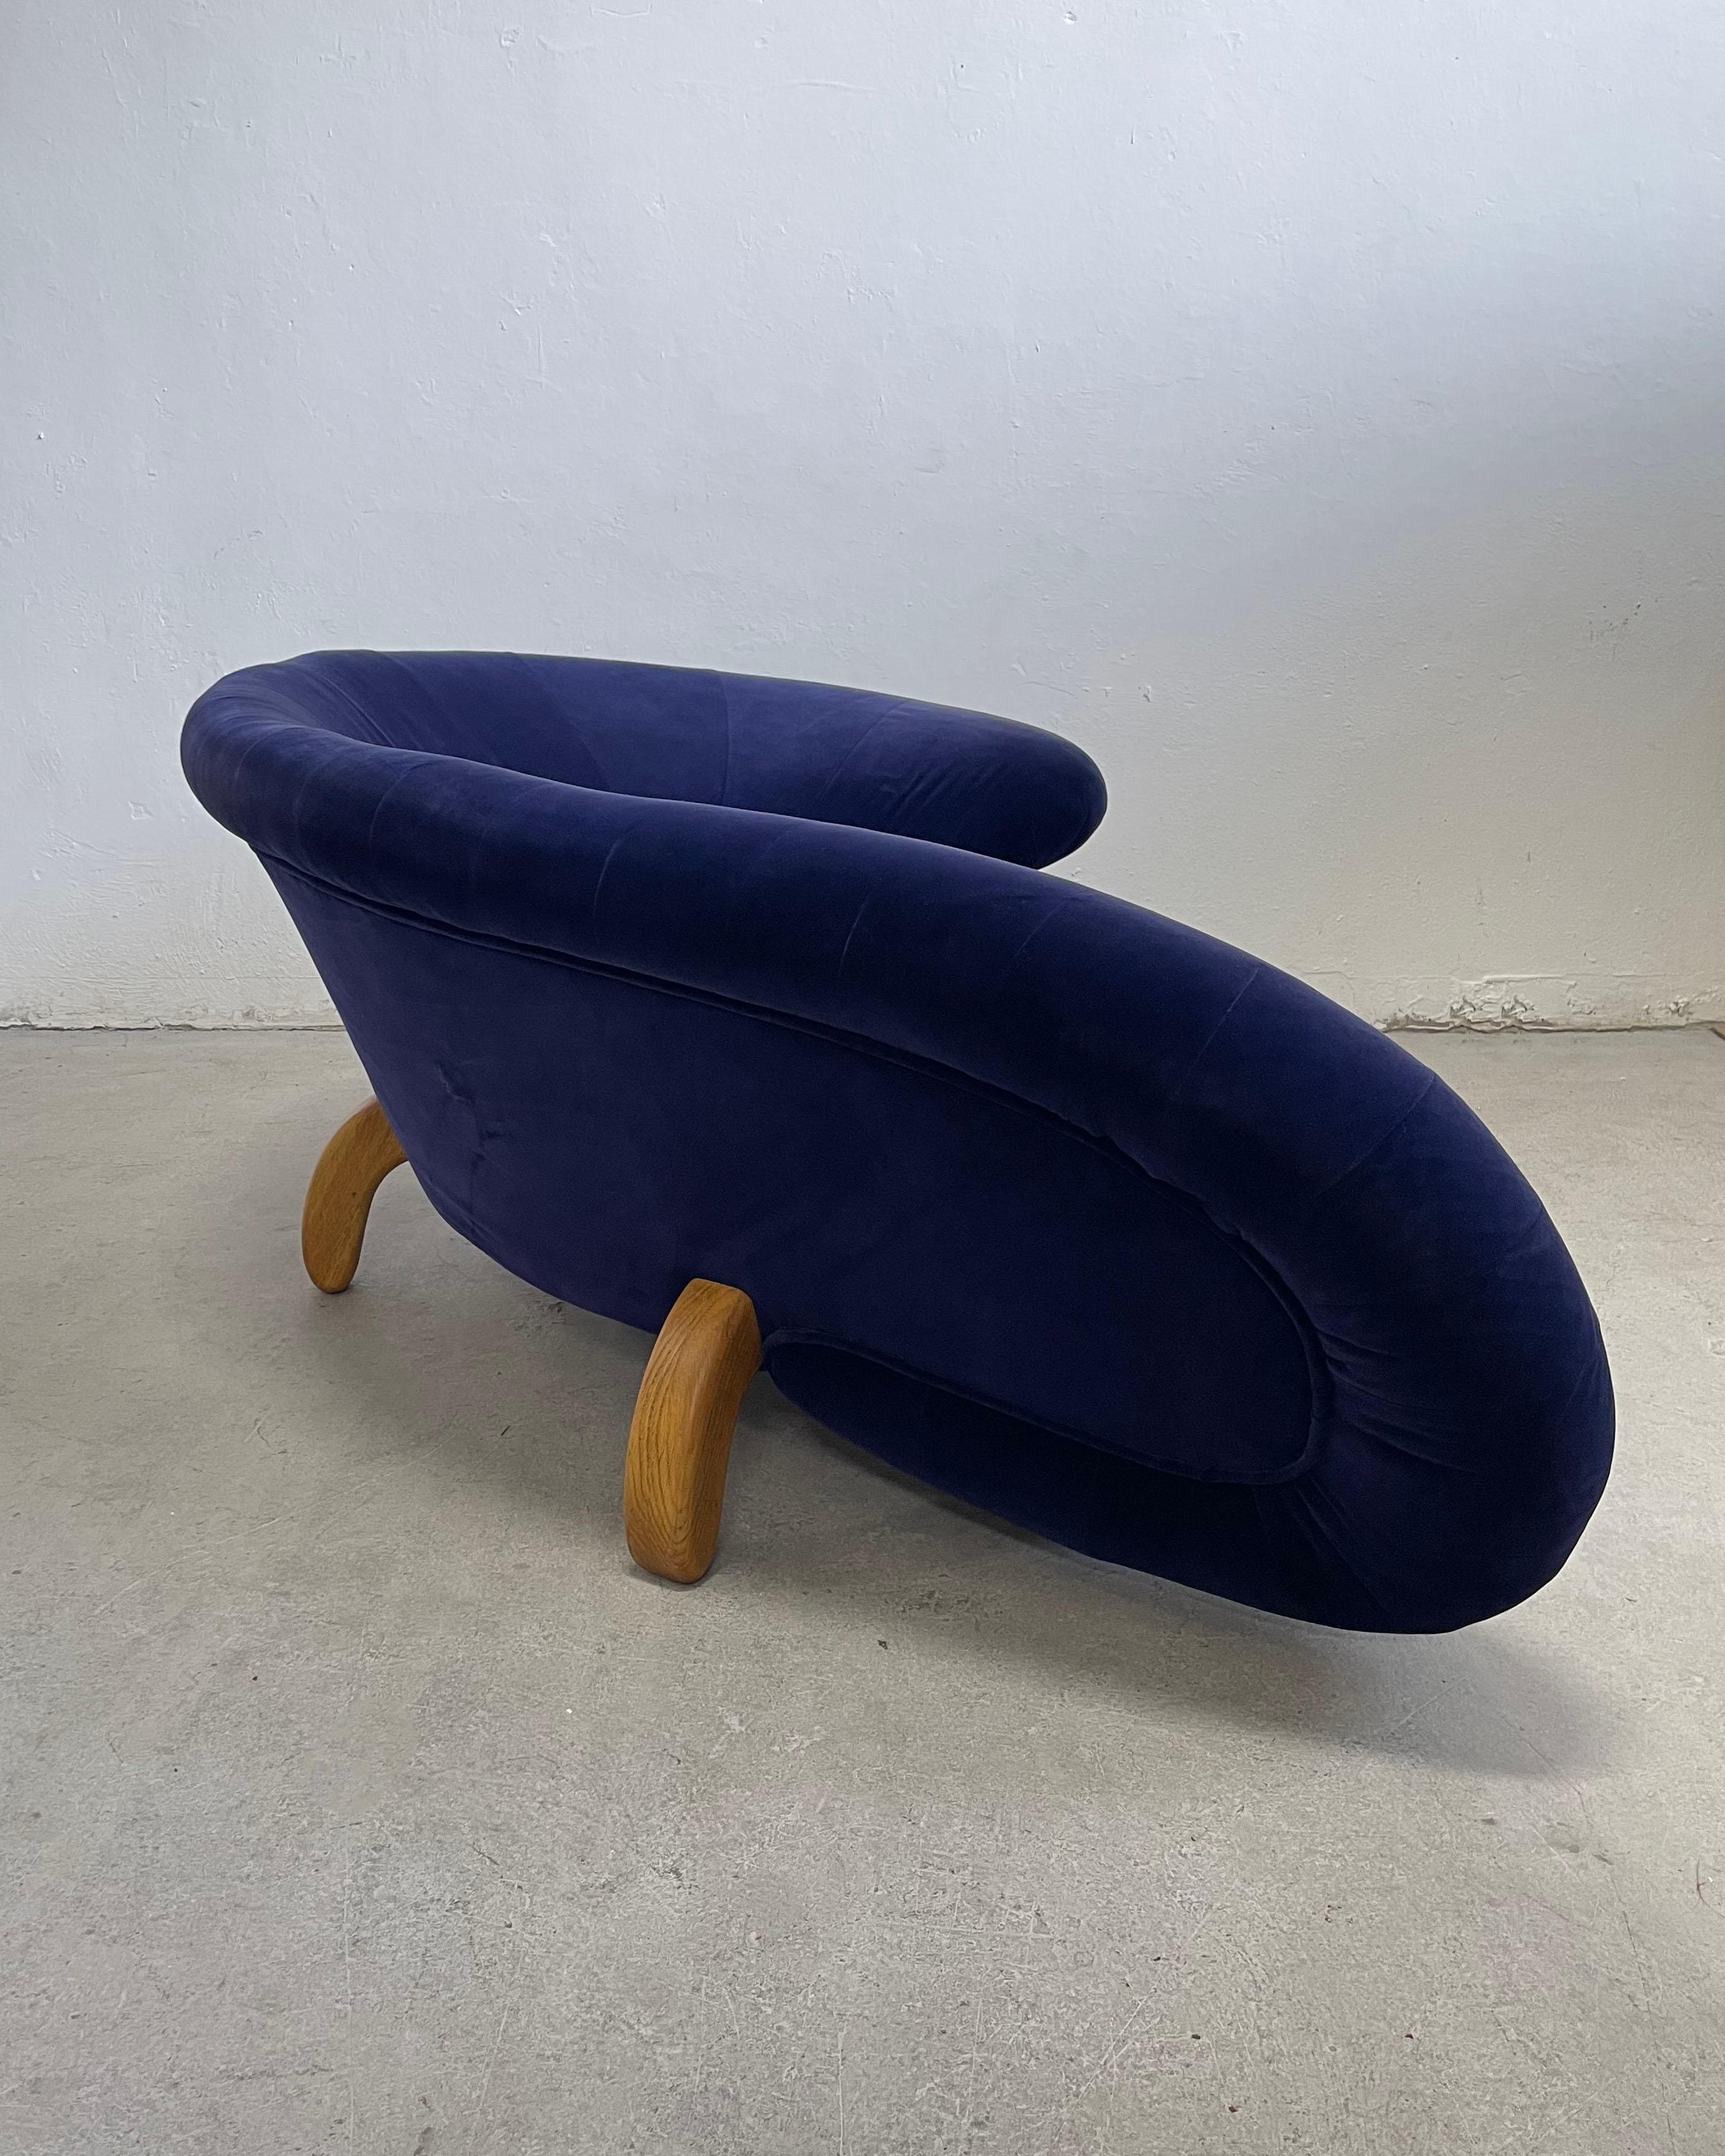 Vintage 20th Century Modern Serpentine Curved Velvet Sofa in Navy Blue Color For Sale 5